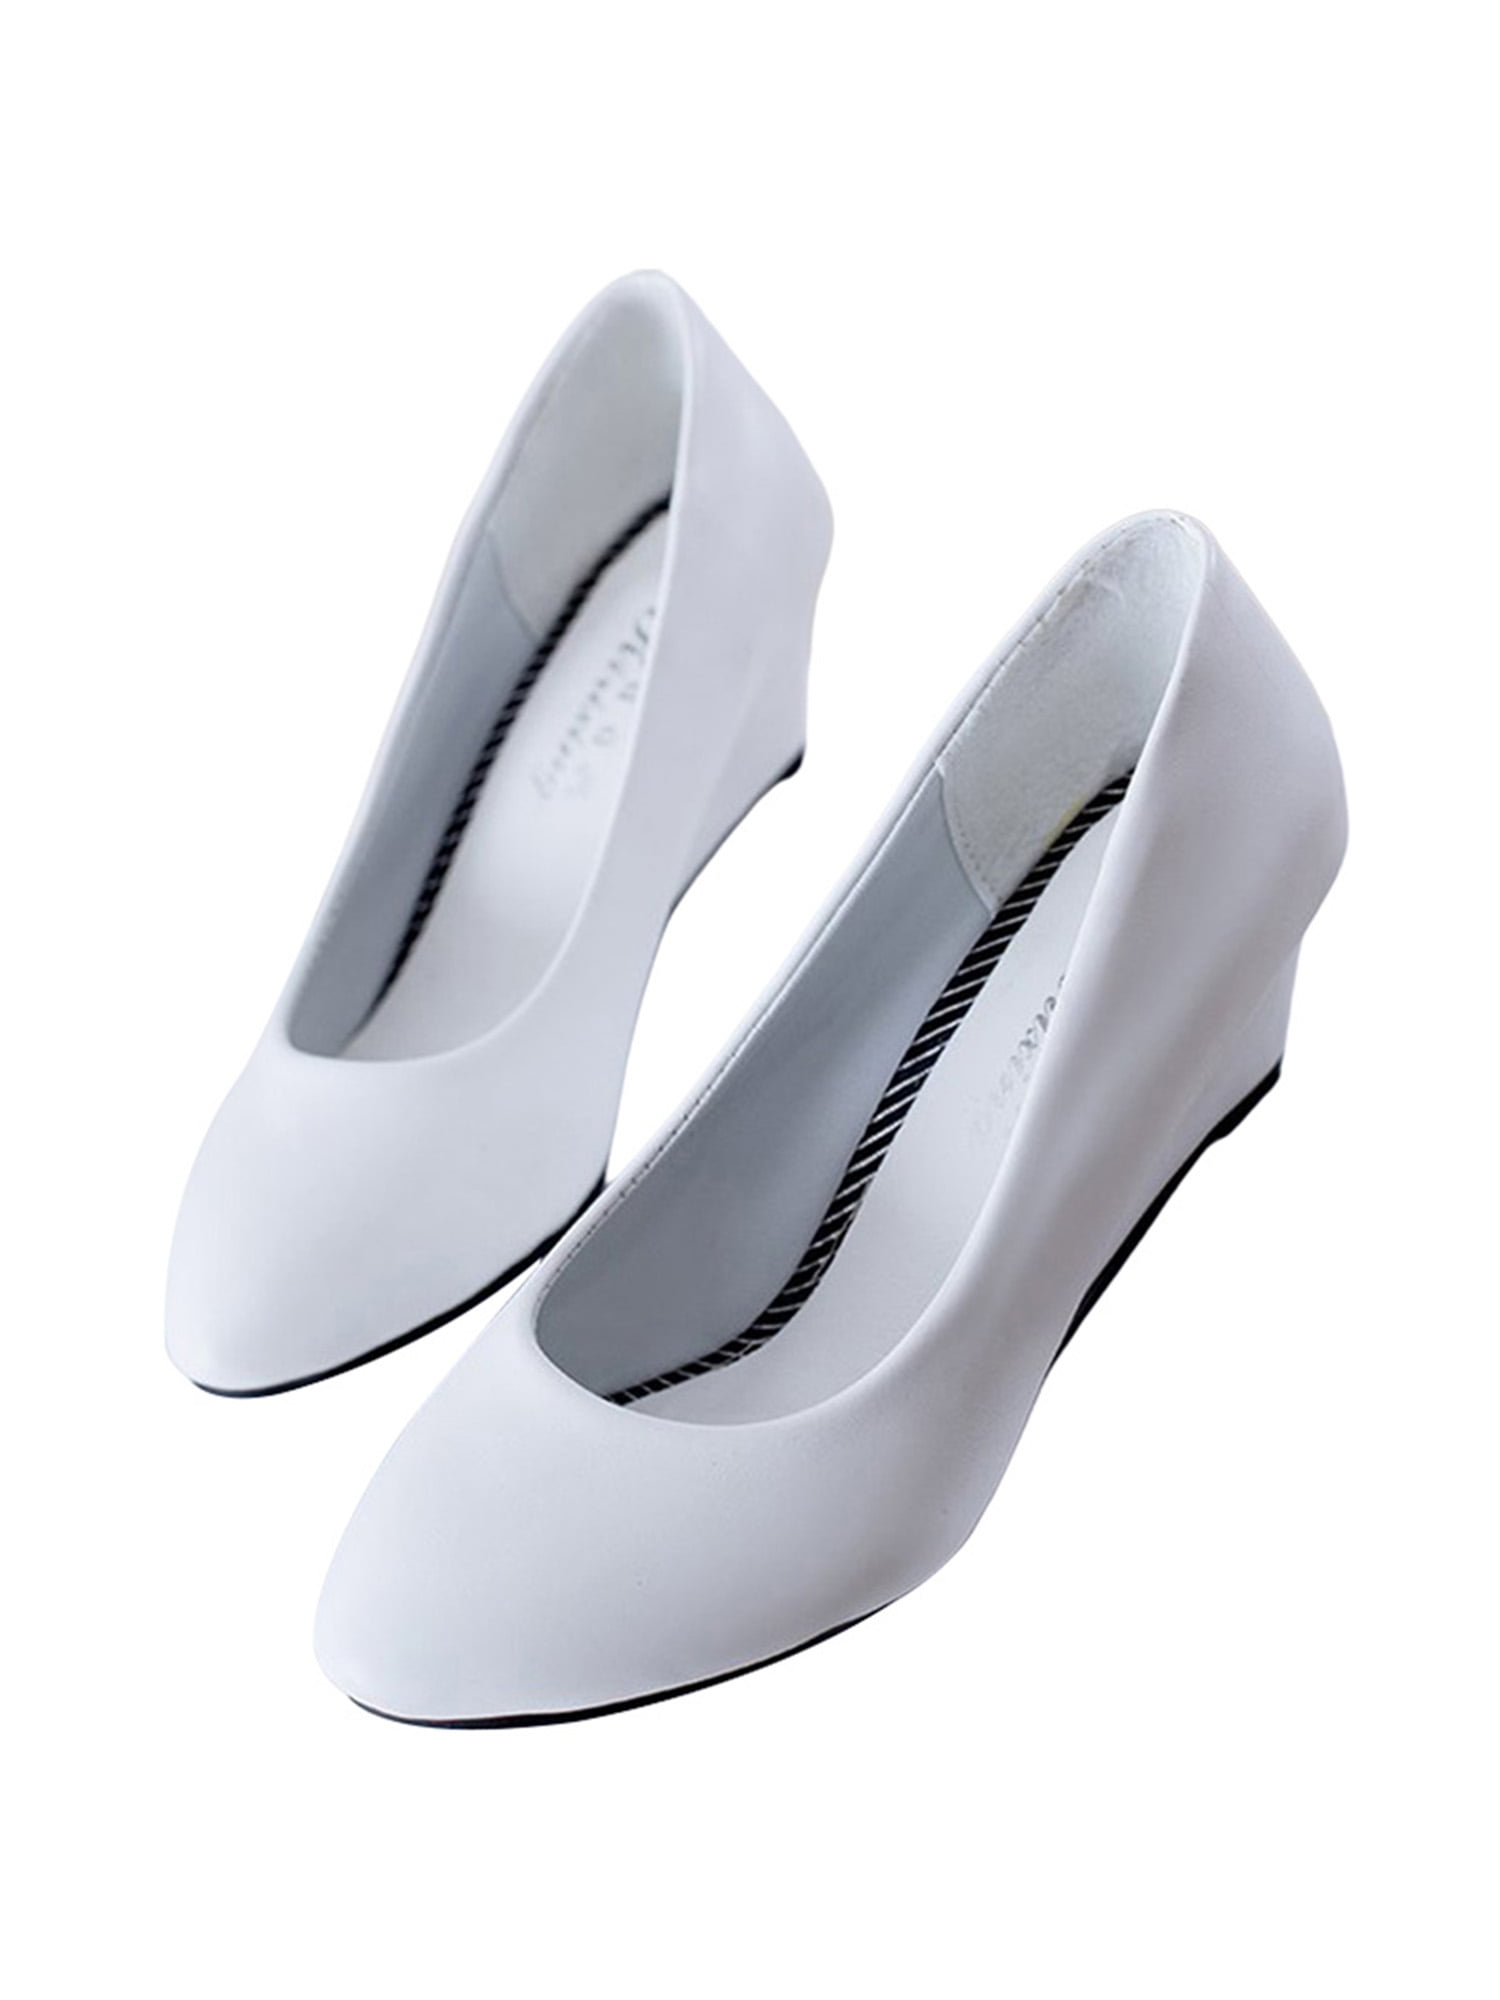 Details about   Womens High Heels Platform Round Toe Slip On Stilettos Party Nightclub Shoes Hot 